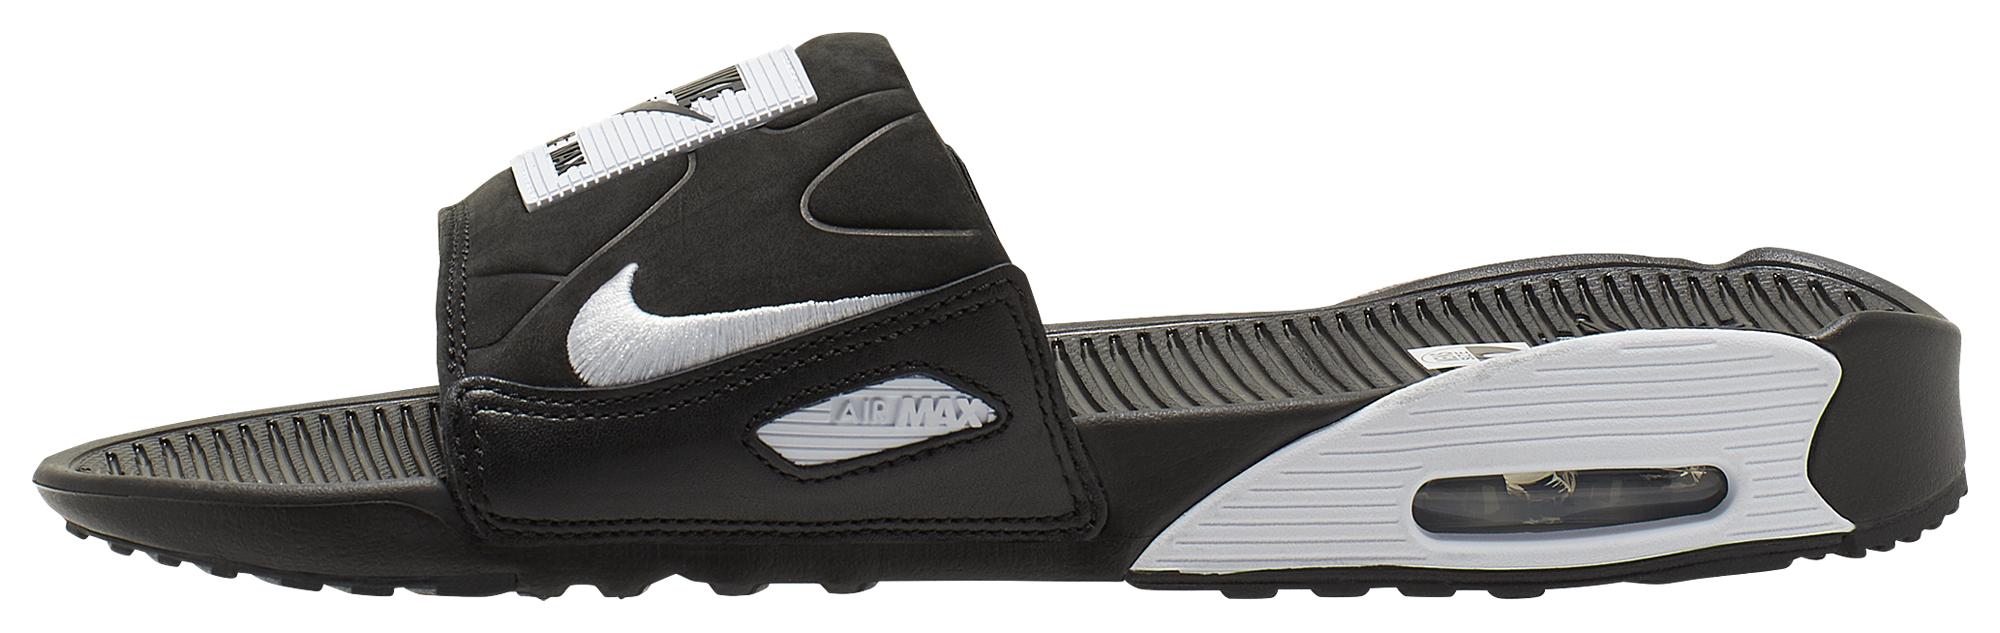 Nike Air Max 90 Slide in Black/White (Black) for Men - Save 59% | Lyst